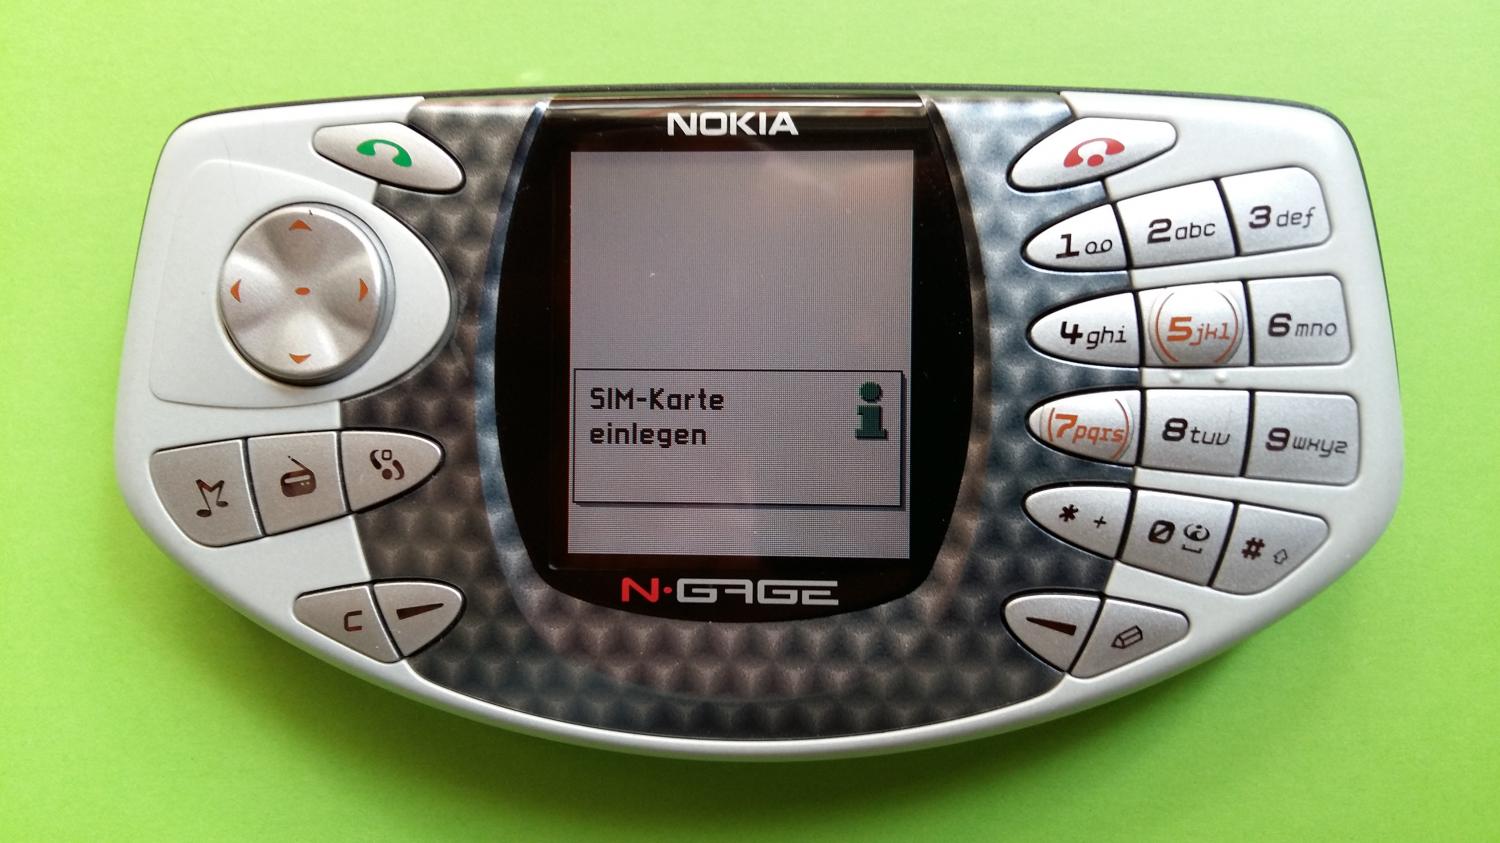 image-7321515-Nokia N-Gage Starship (1)1.jpg